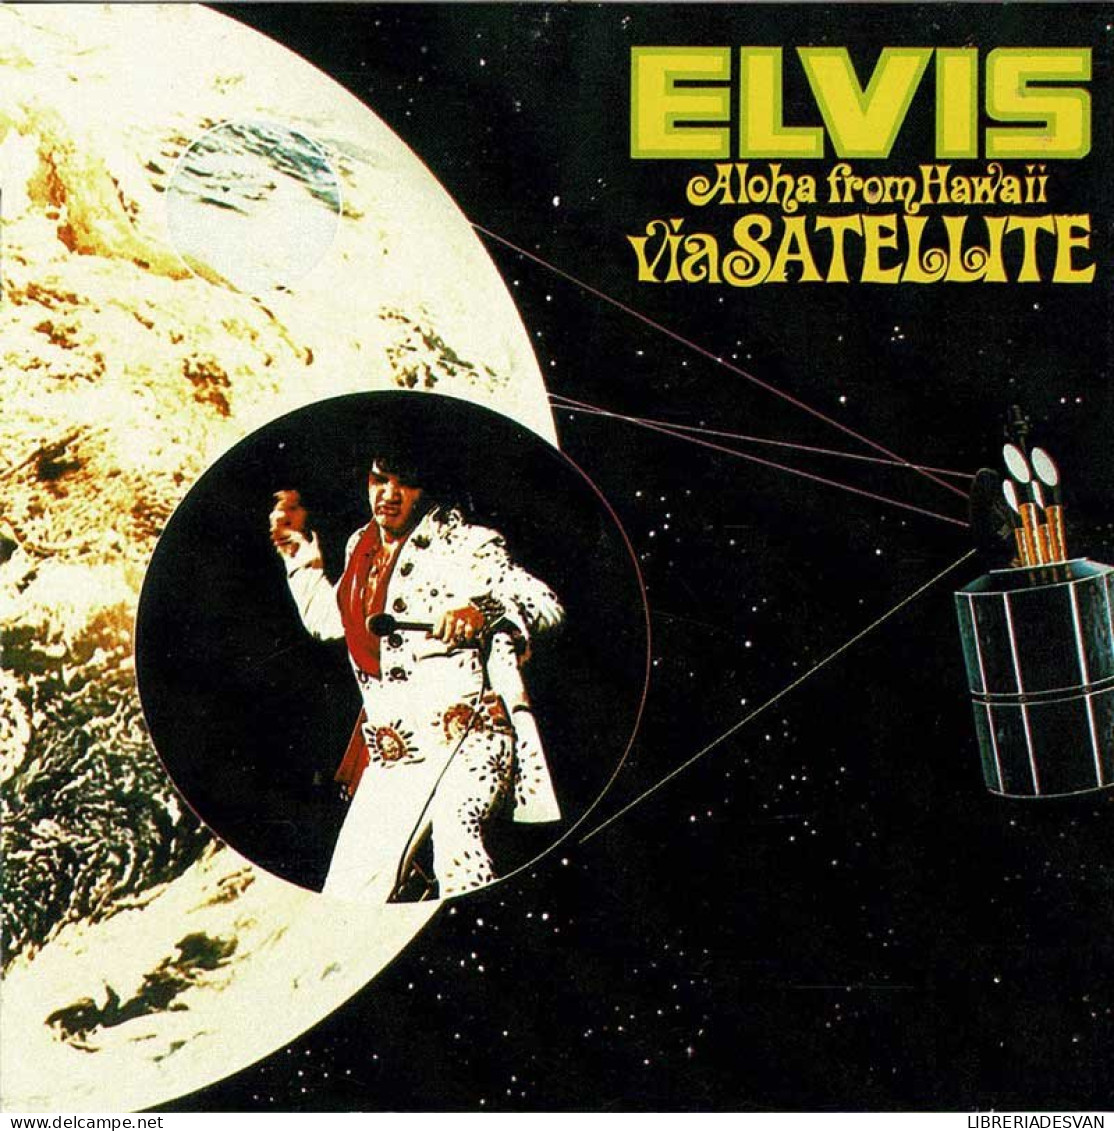 Elvis Presley - Aloha From Hawaii Via Satellite. CD - Rock